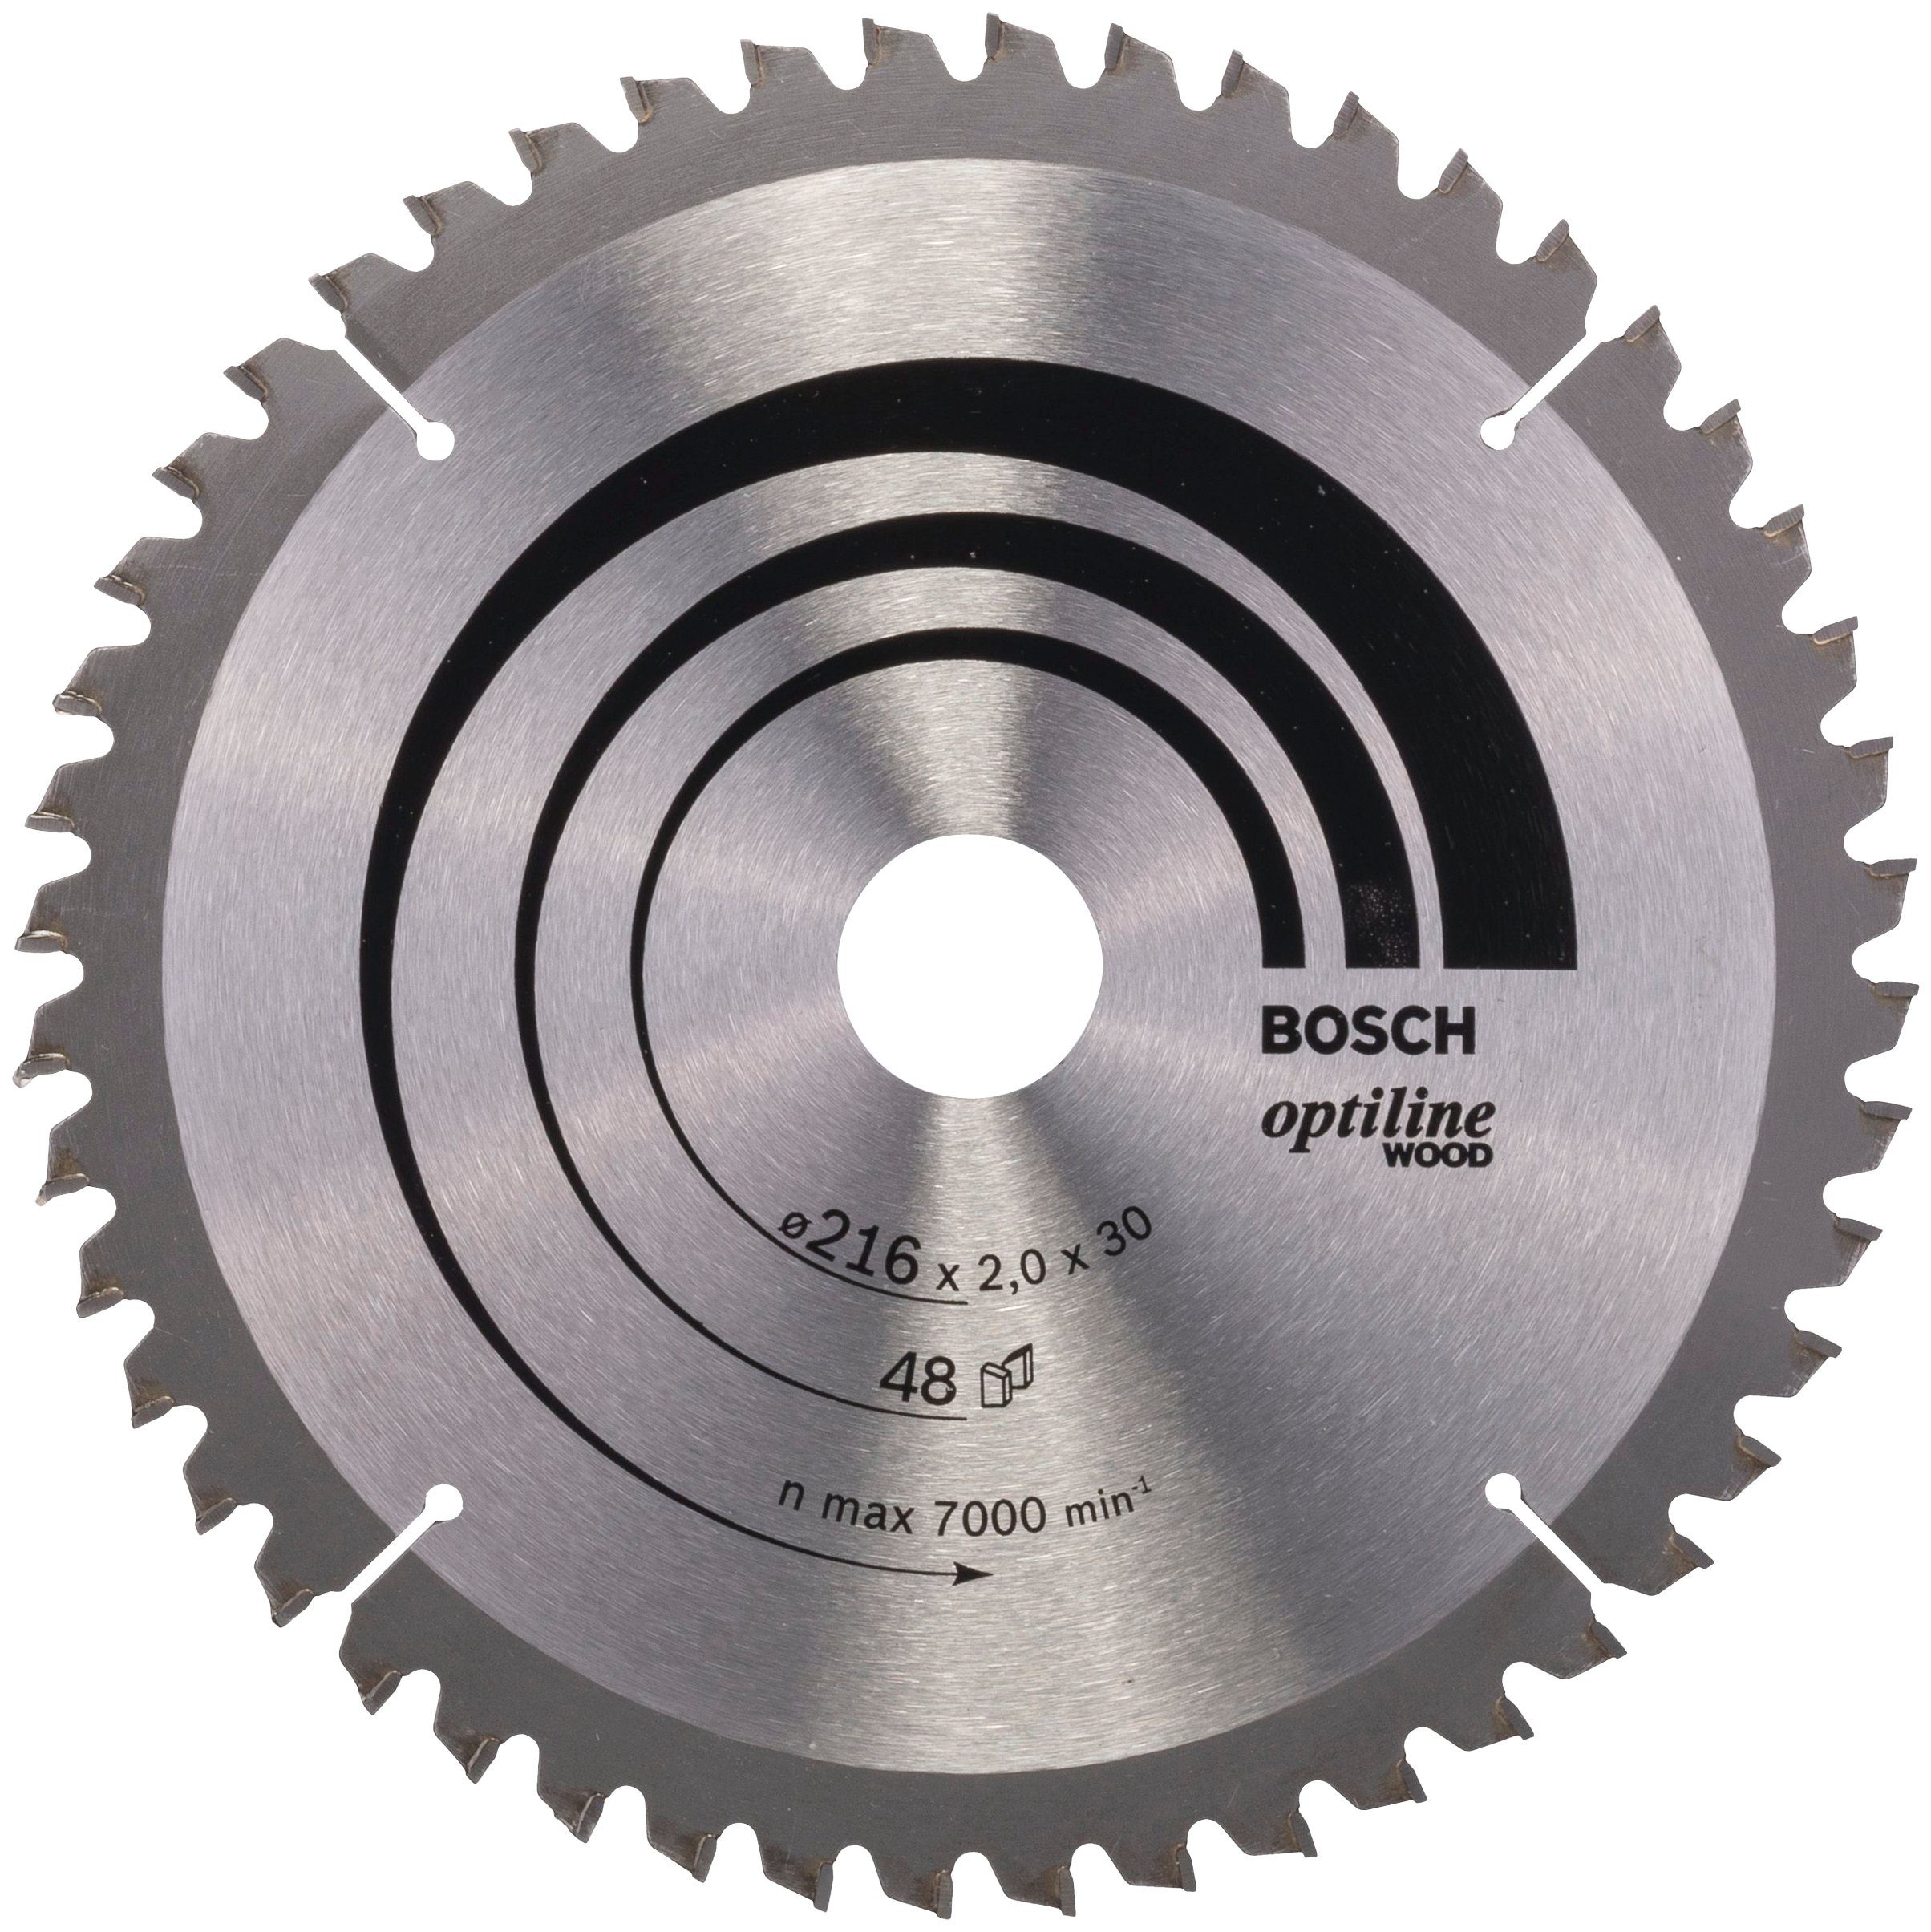 Bosch Professional Kreissägeblatt mm, x 2,0 Mittel x grob 216 - Optiline Schnittgüte: Wood, 48, 30